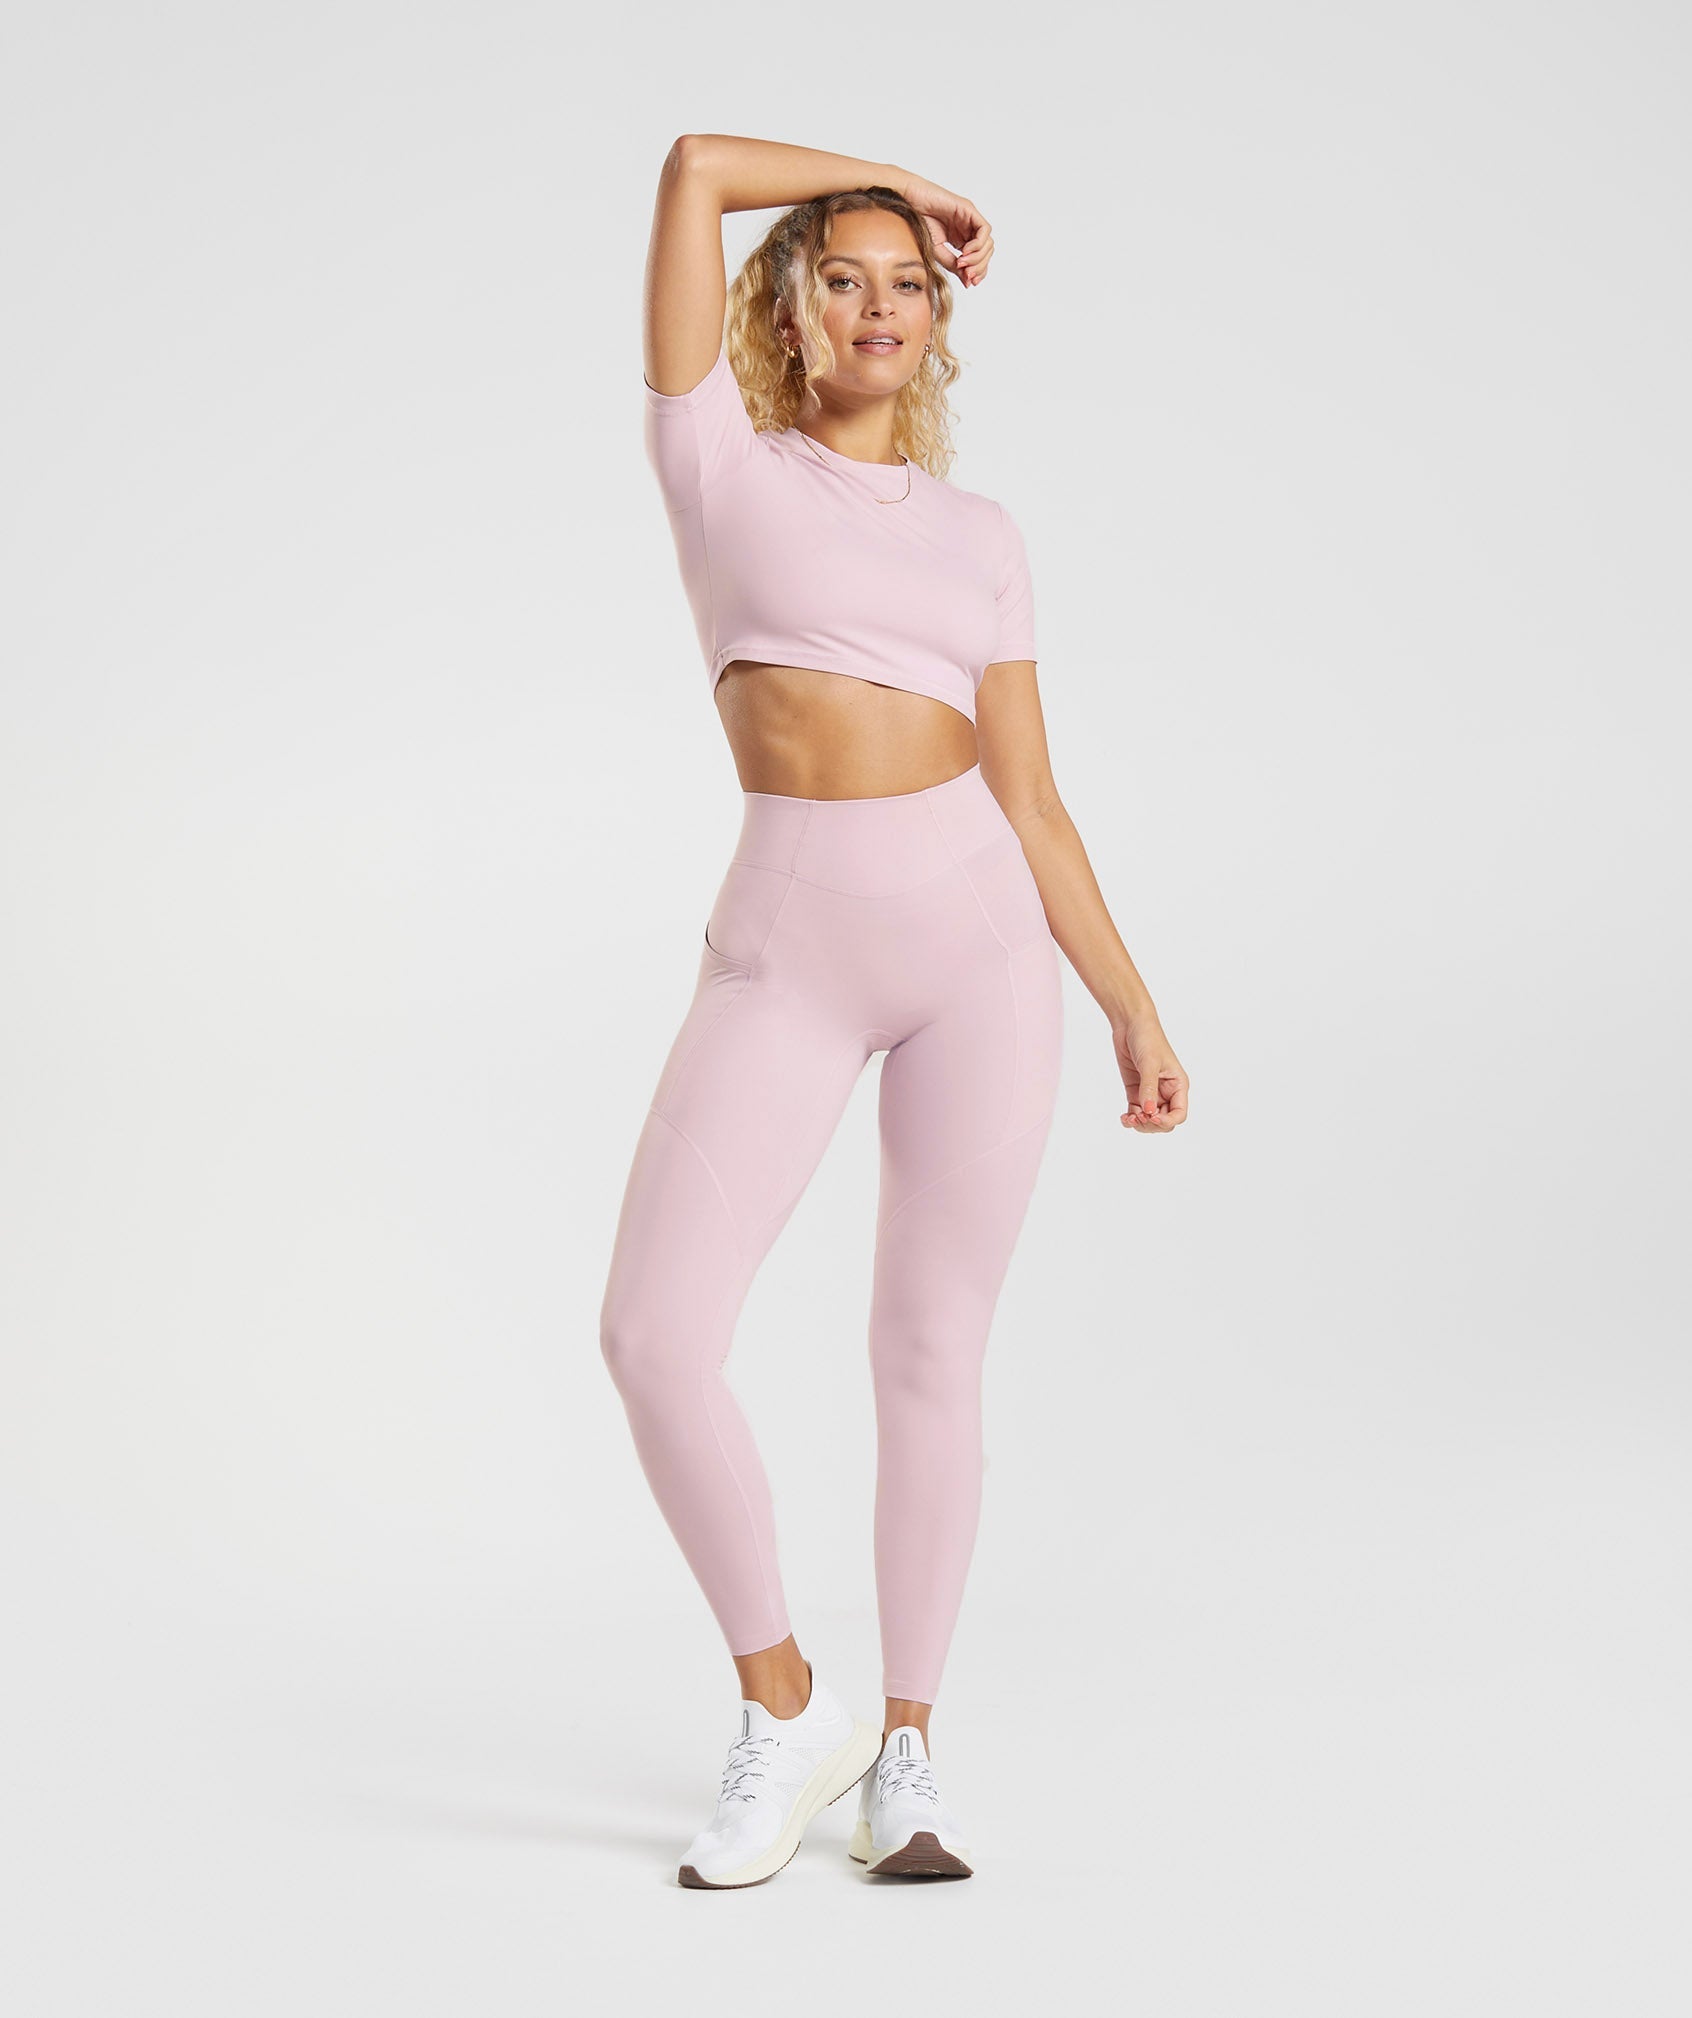 Whitney Short Sleeve Crop Top in Pressed Petal Pink - view 4